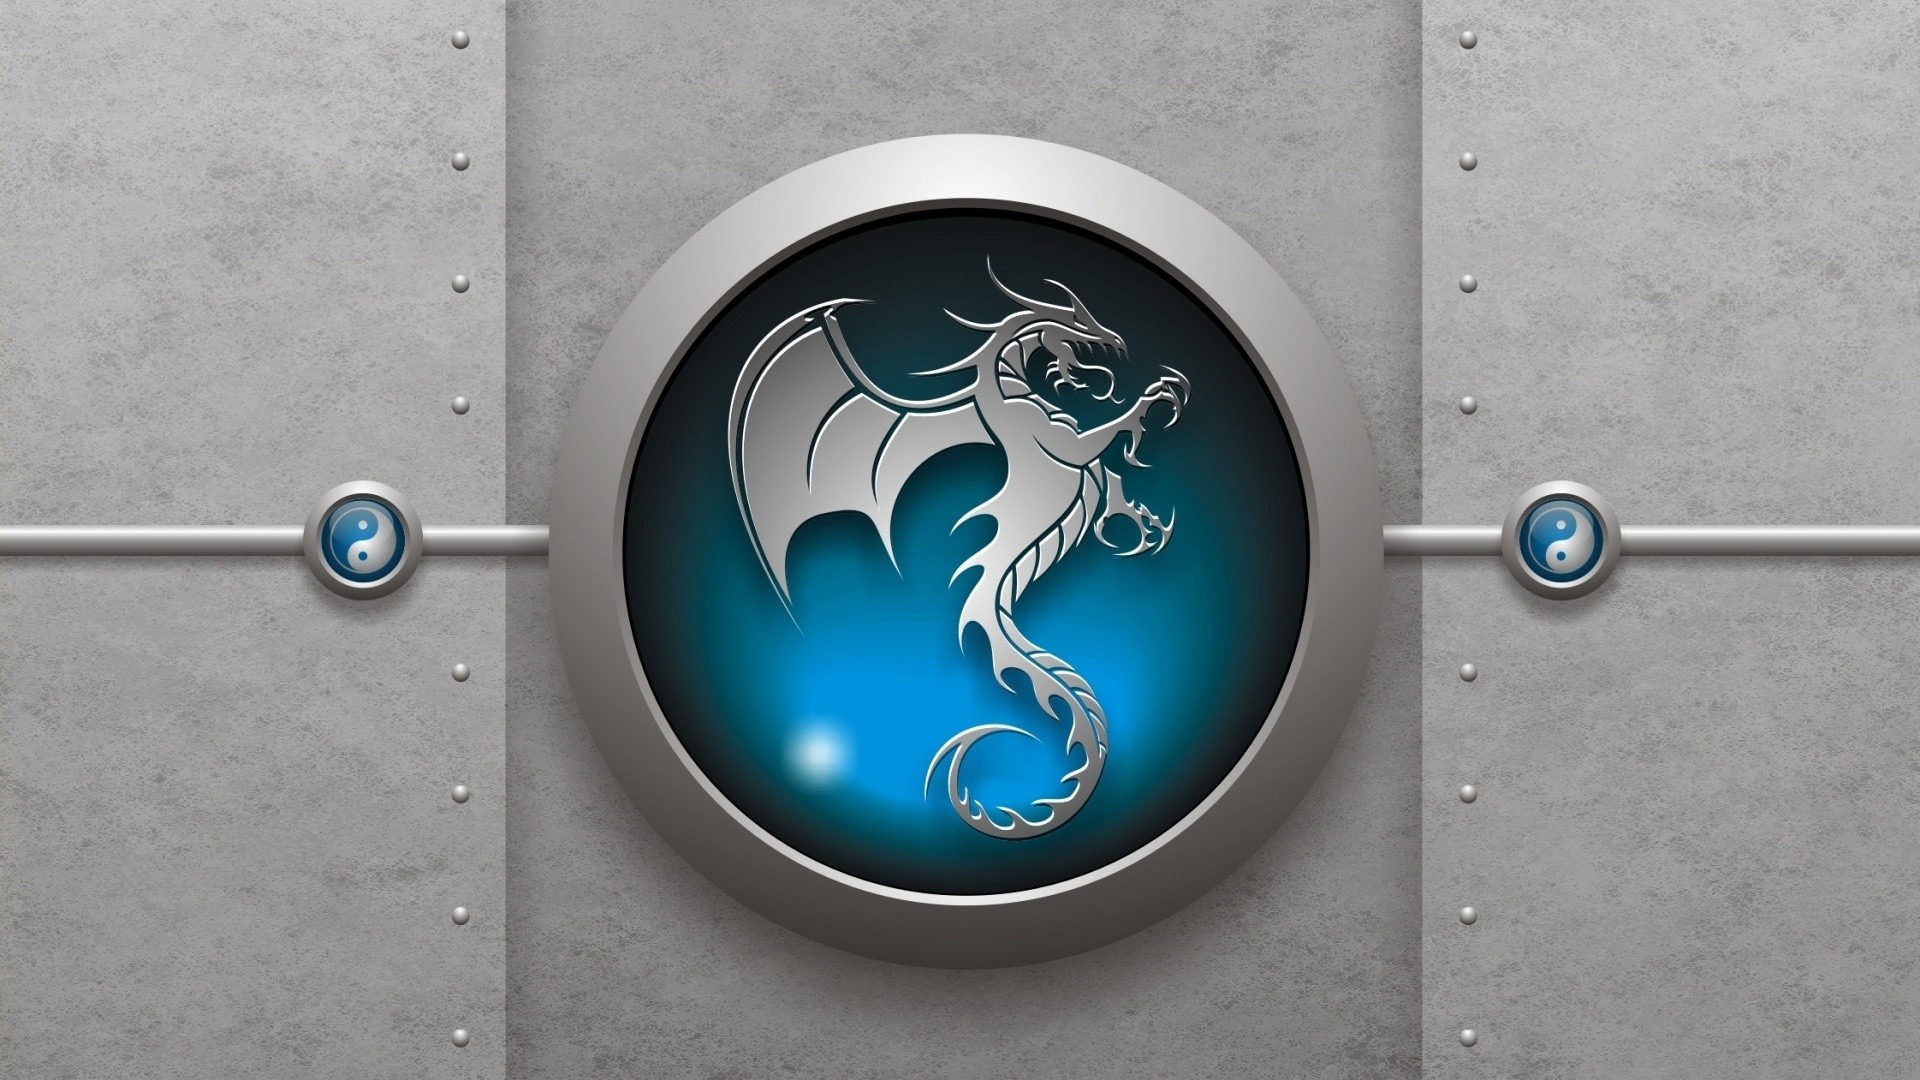 1920x1080 3d wallpaper free download | Download dragon logo 3d hd wallpaper free  download Full Size